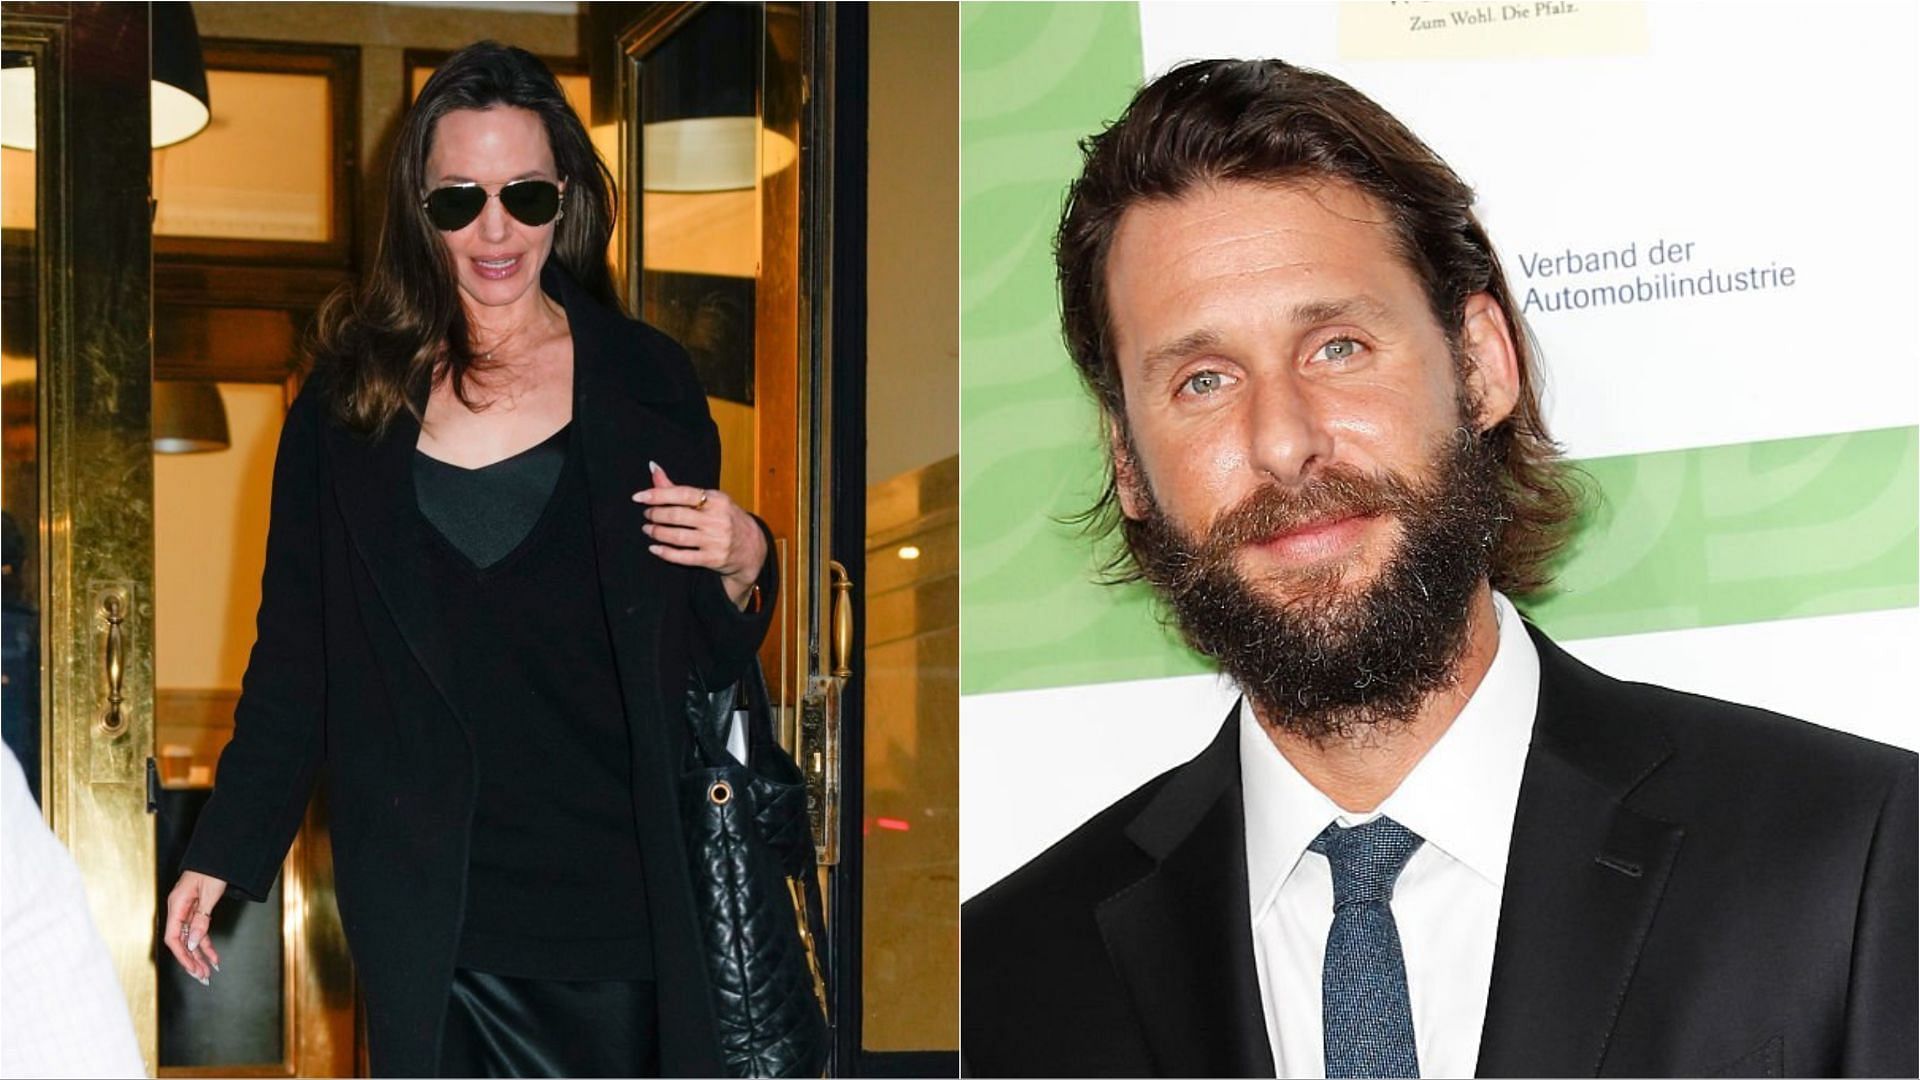 Angelina Jolie and David Mayer de Rothschild have been spotted together (Images via Gotham and Franziska Krug/Getty Images)